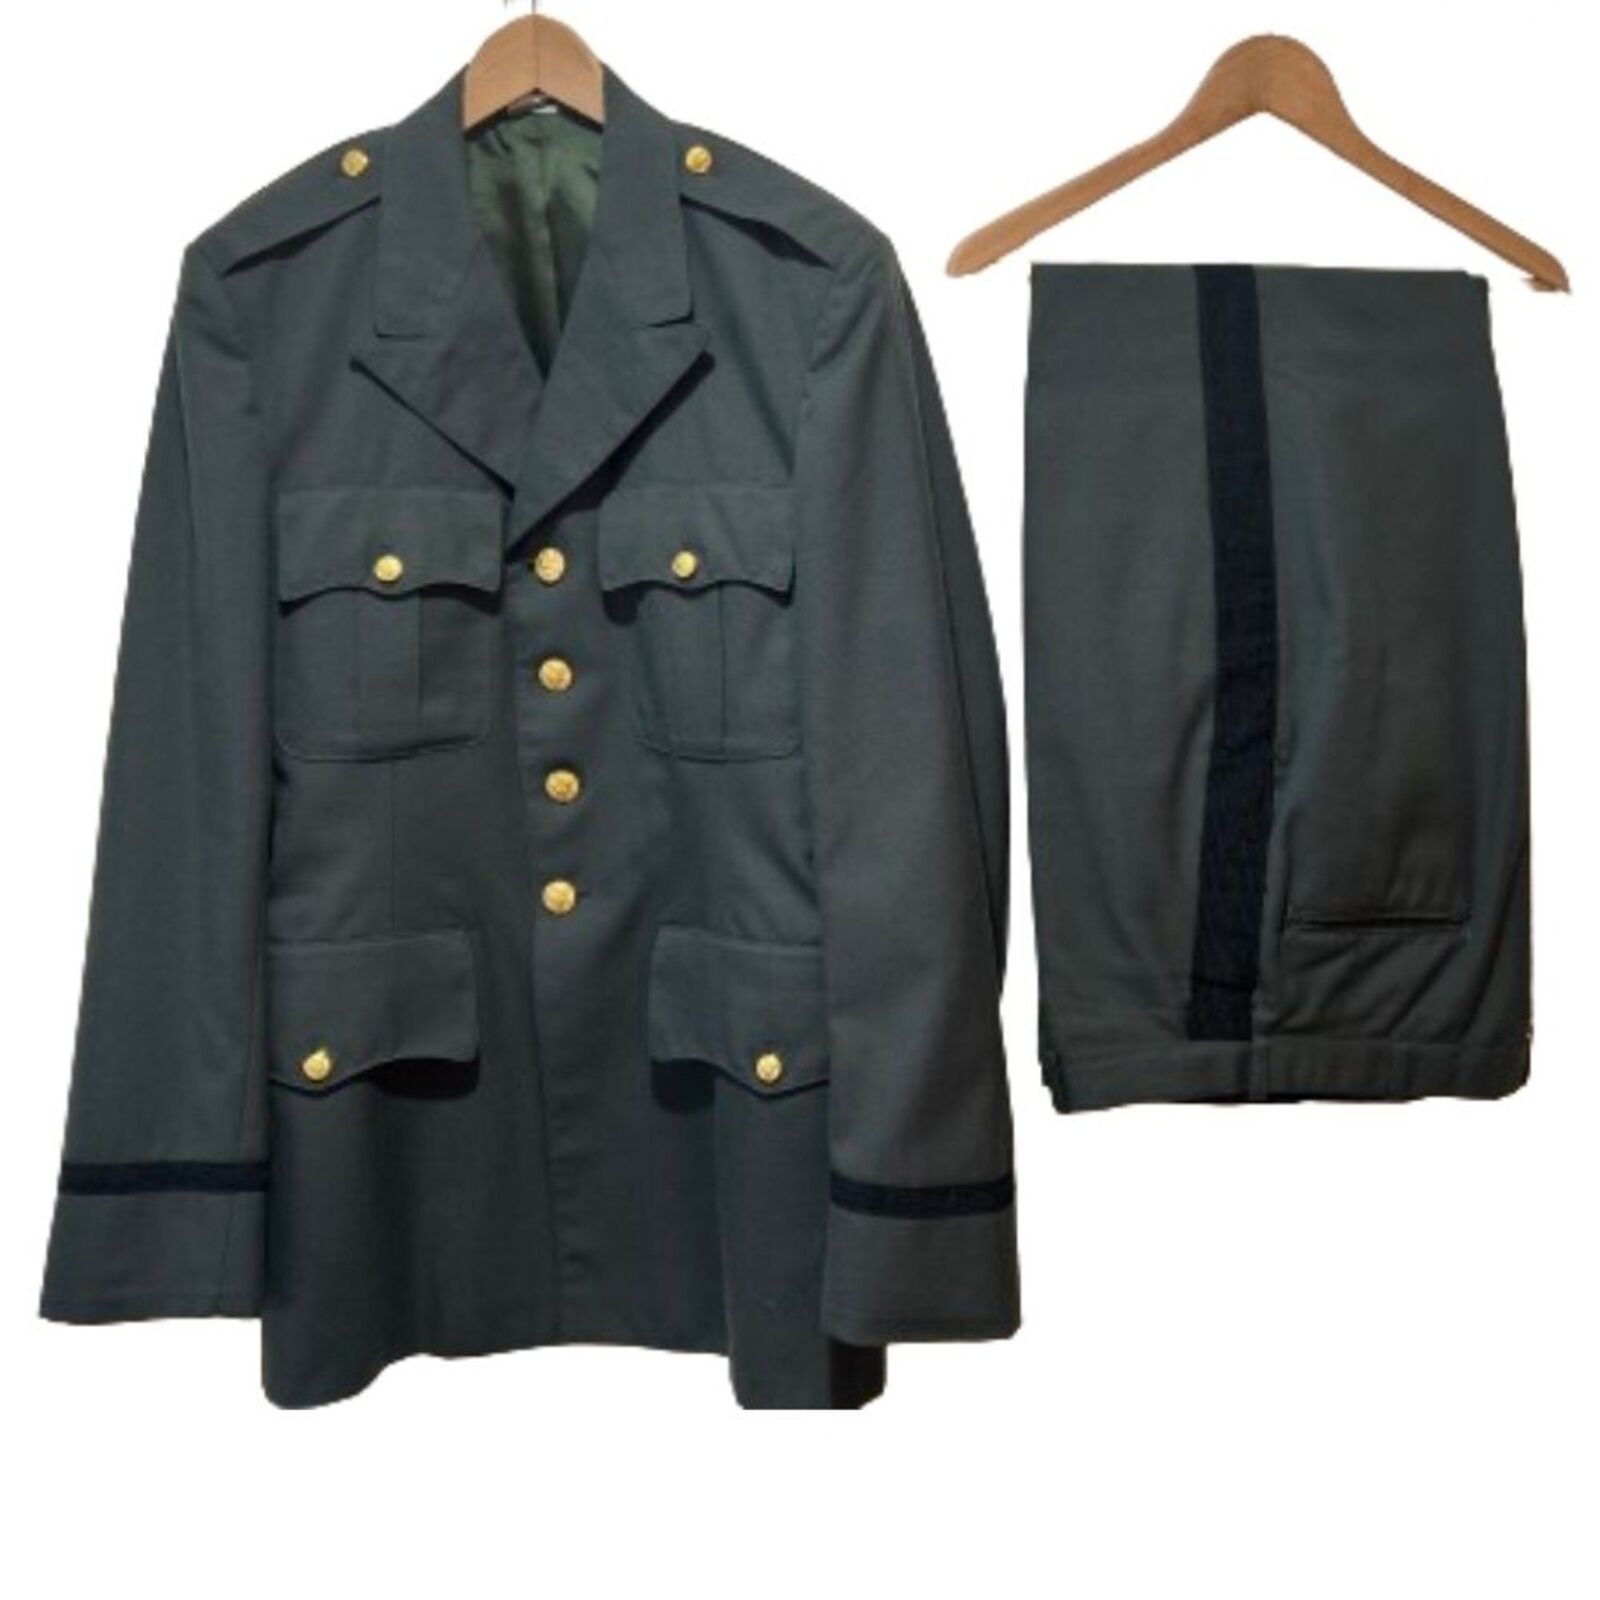 Vintage Military US Army Uniform Green Wool Jacket Coat & Pant Suit & Two Badges